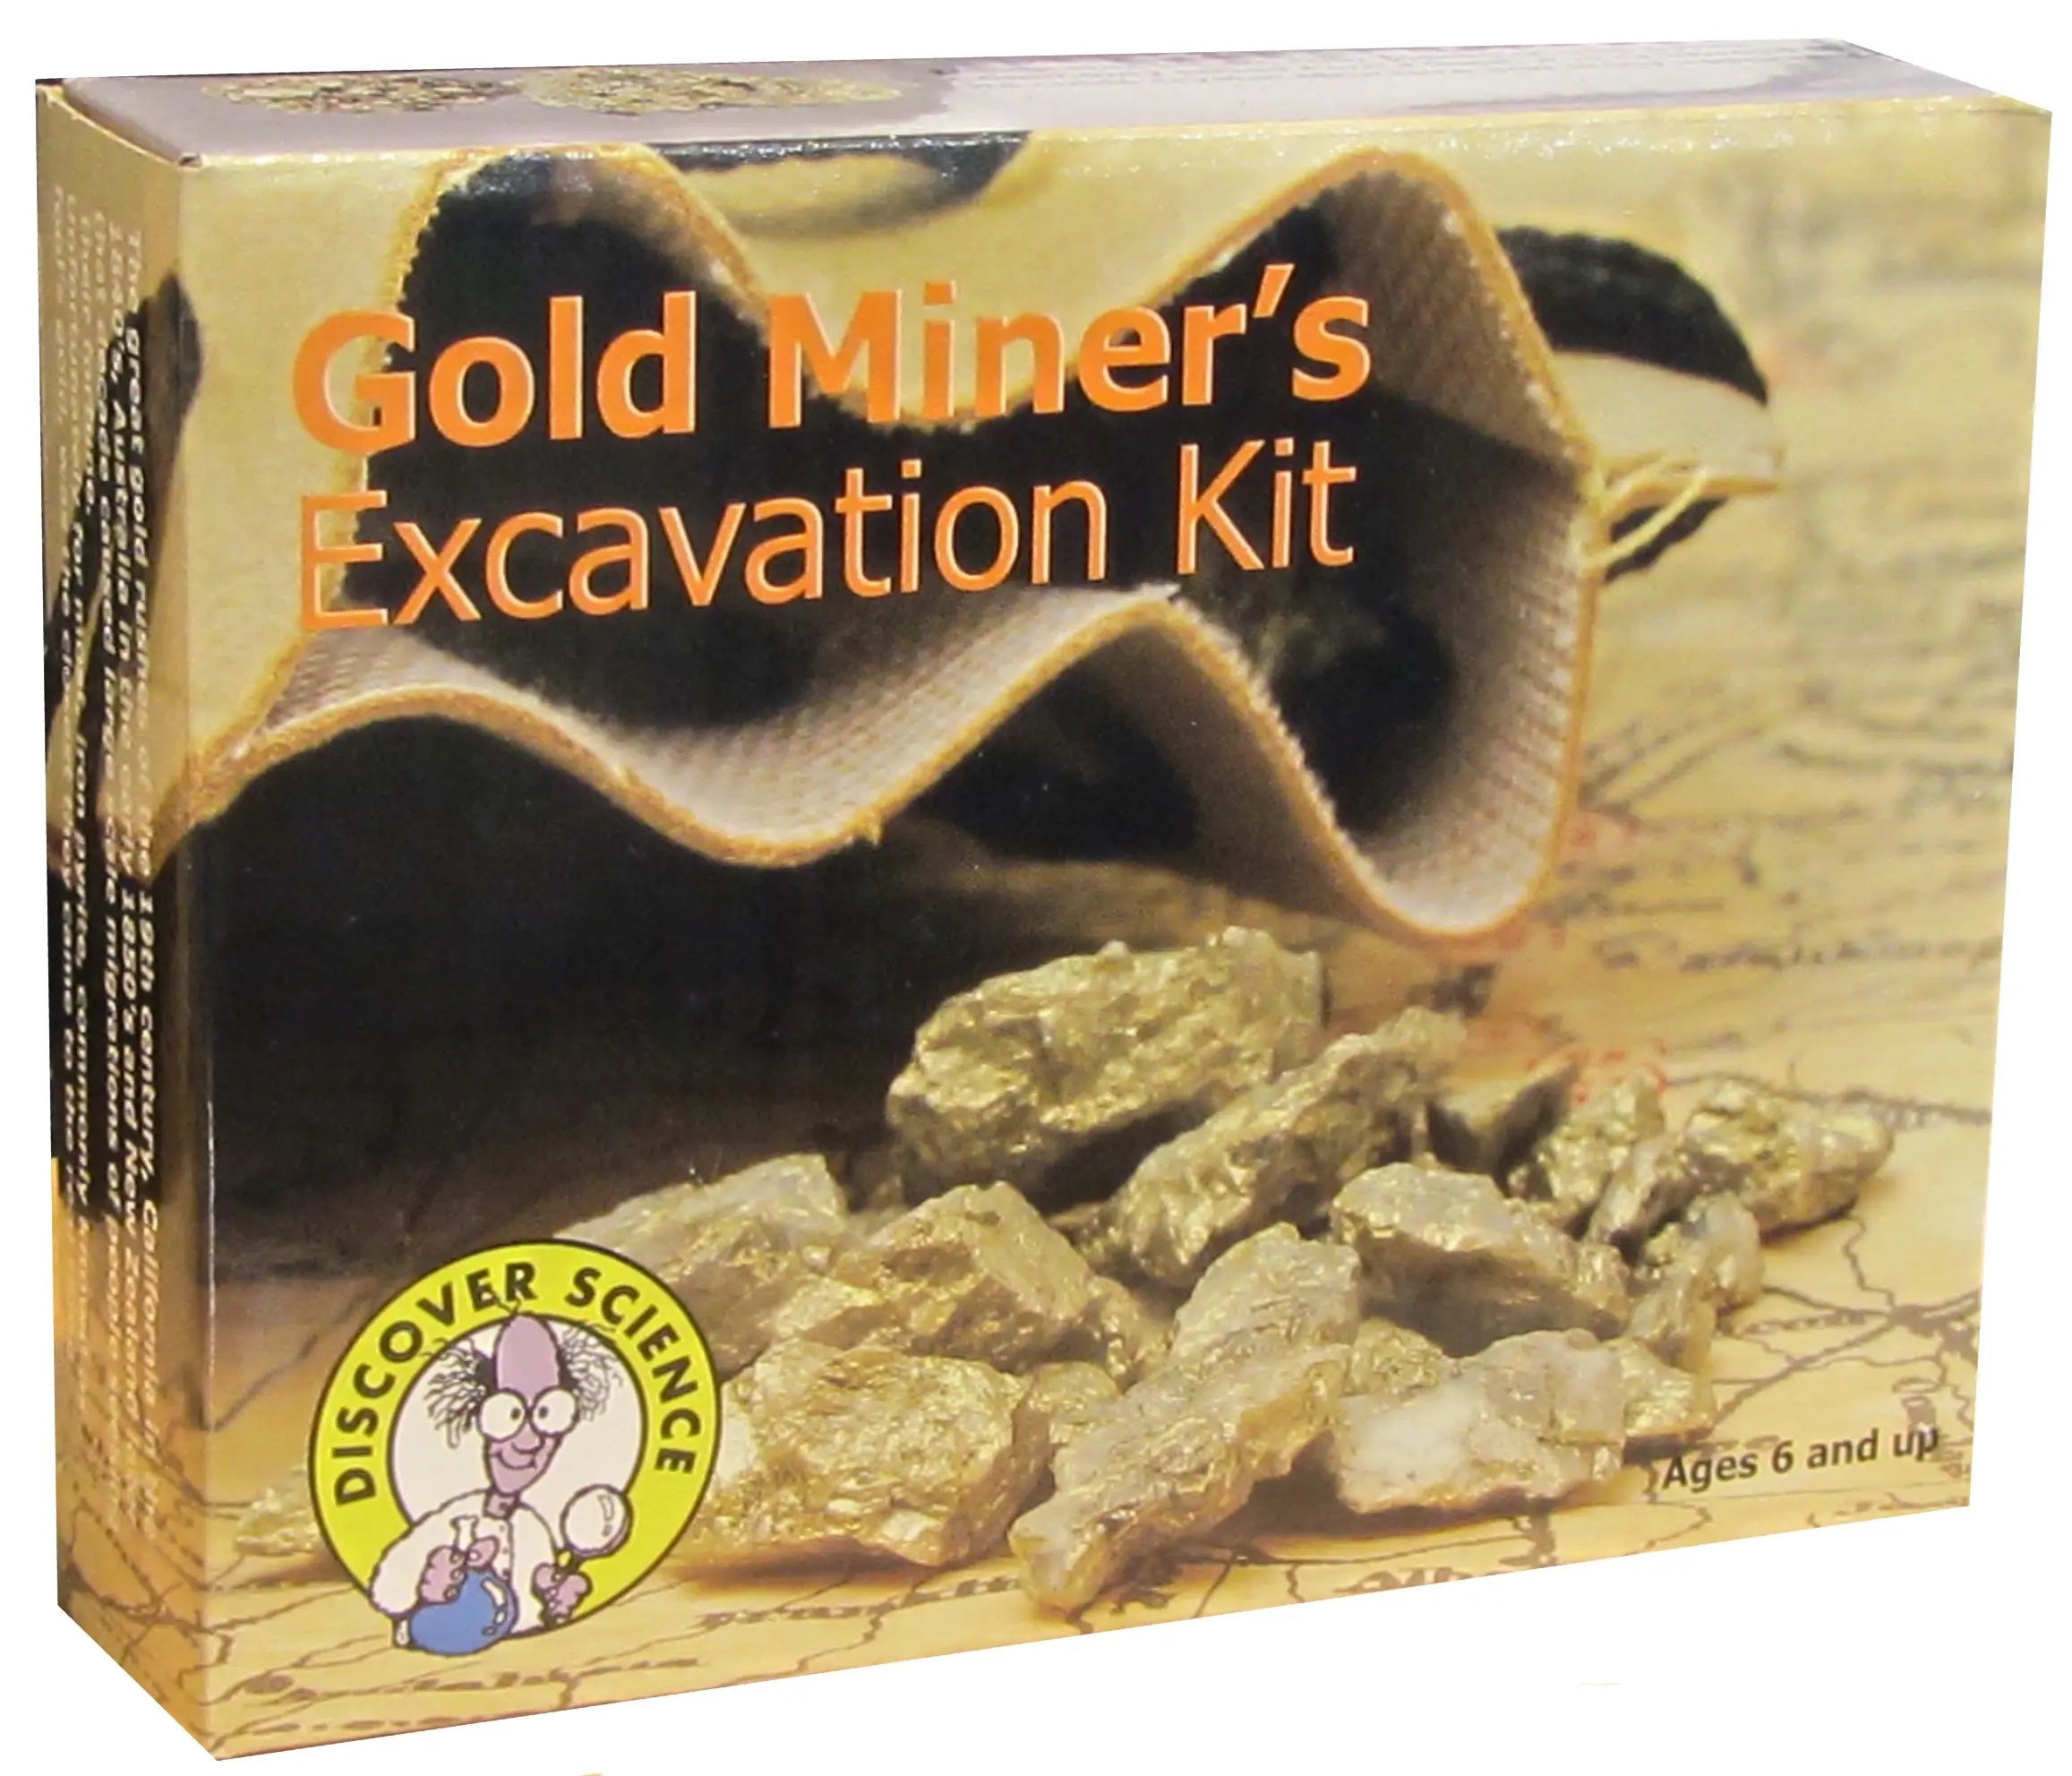 Gold Miner's Excavation Kit